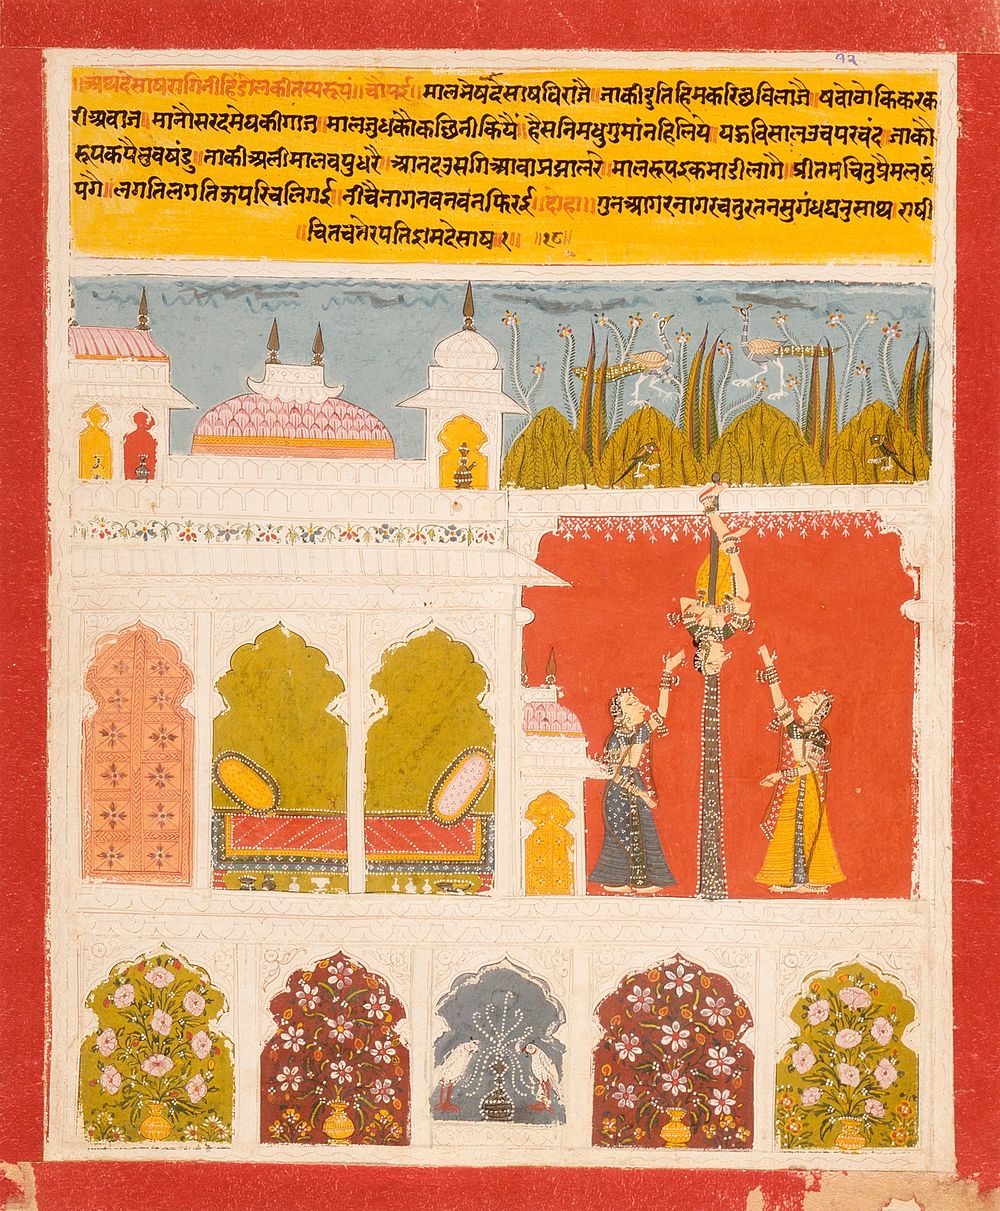 Desakhya Ragini, Third Wife of Hindola Raga, Folio from a Ragamala (Garland of Melodies)